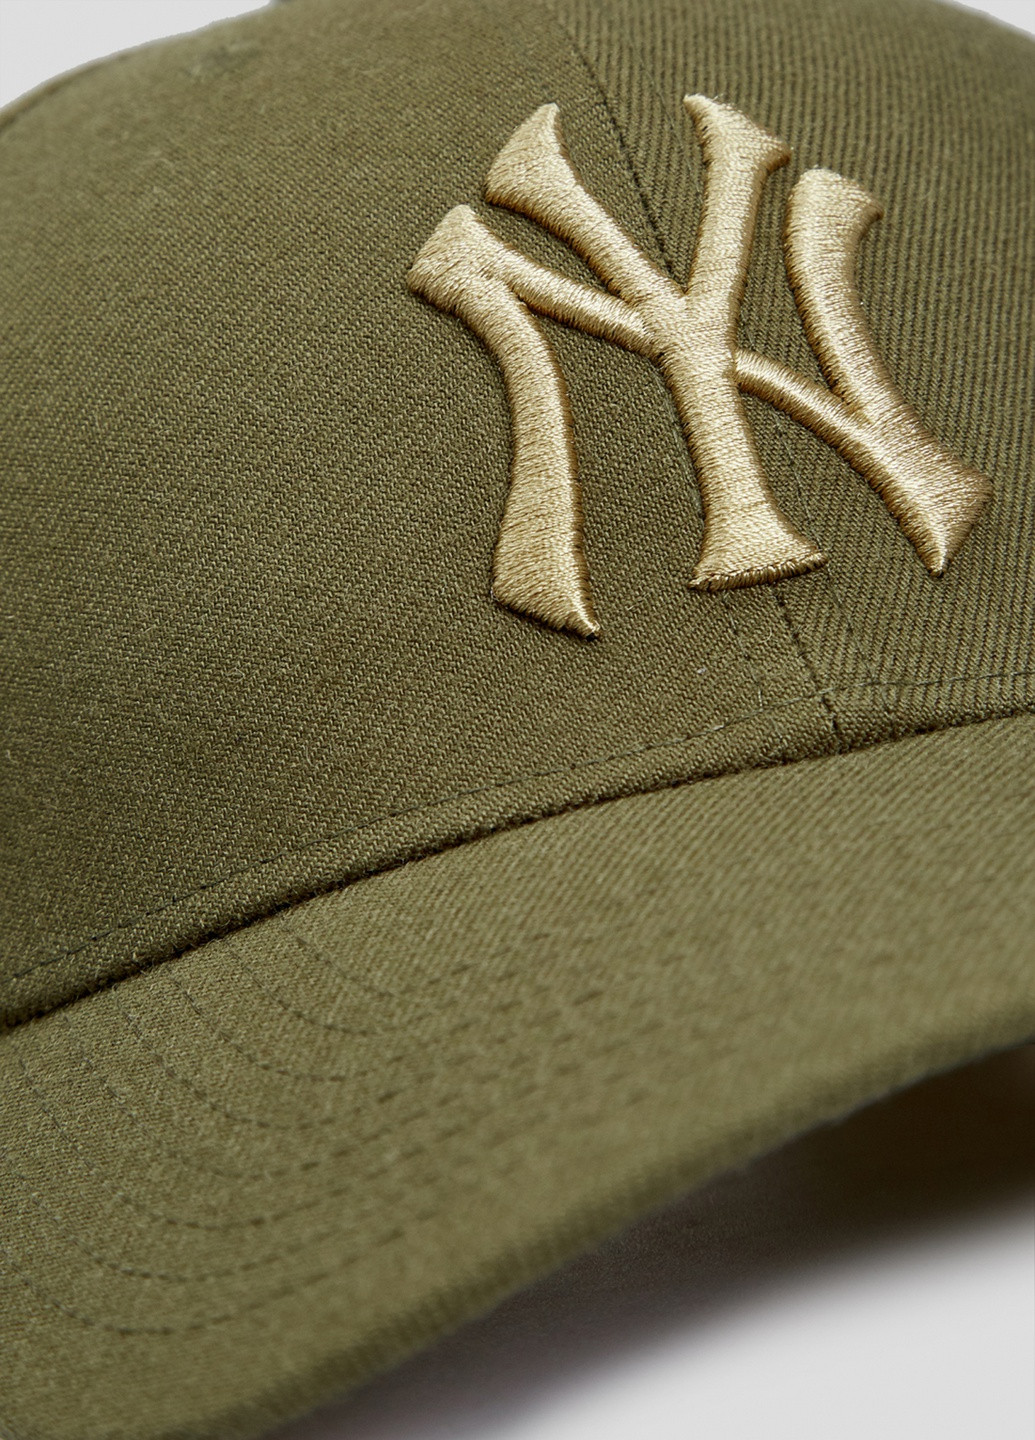 Зеленая кепка Yankees Mvp Snapback 47 Brand (255240816)